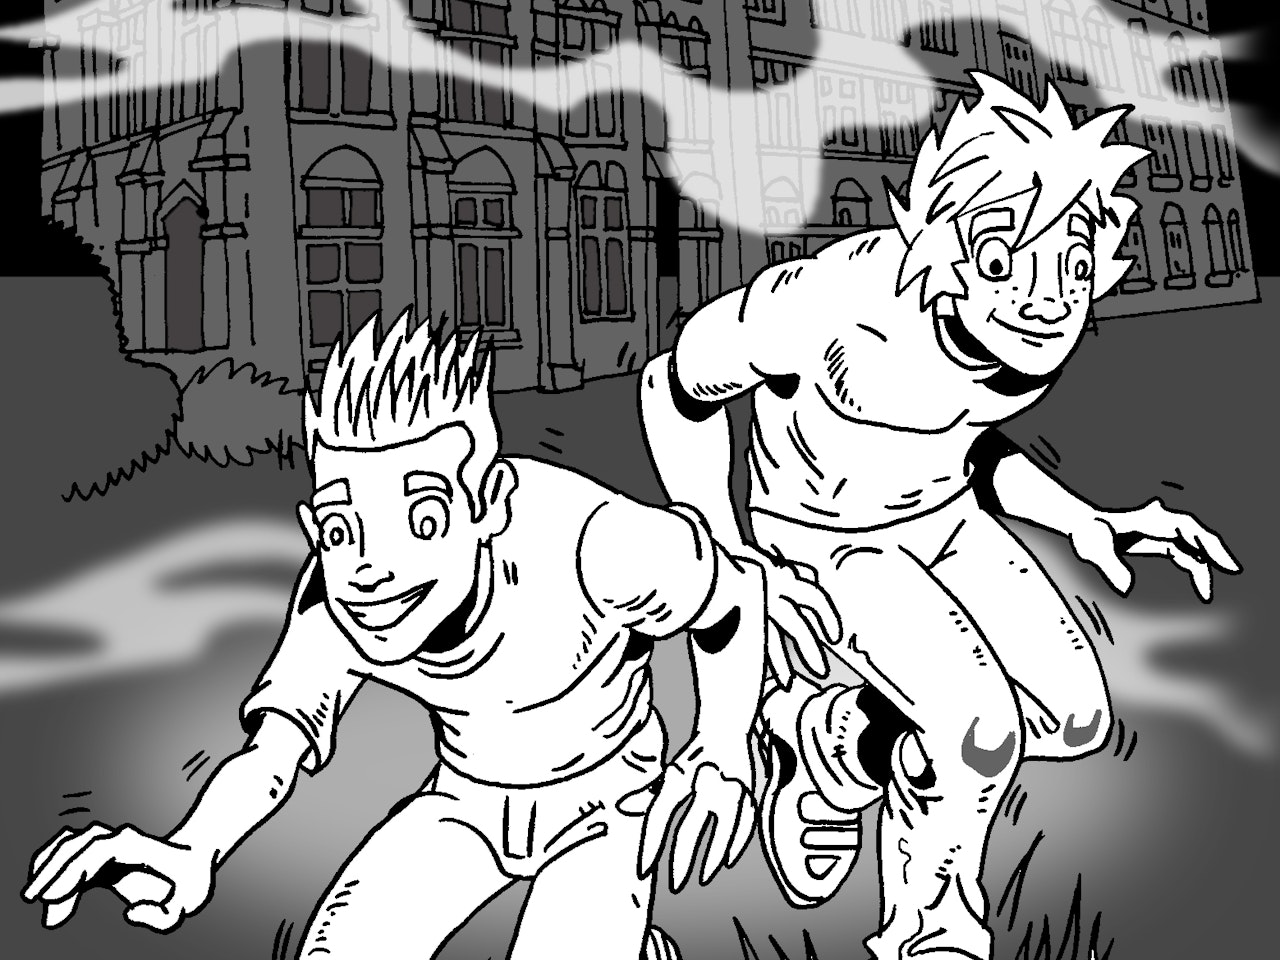 spooky horror manor manga anime childrens cartoon comic strip Book cover illustration animation